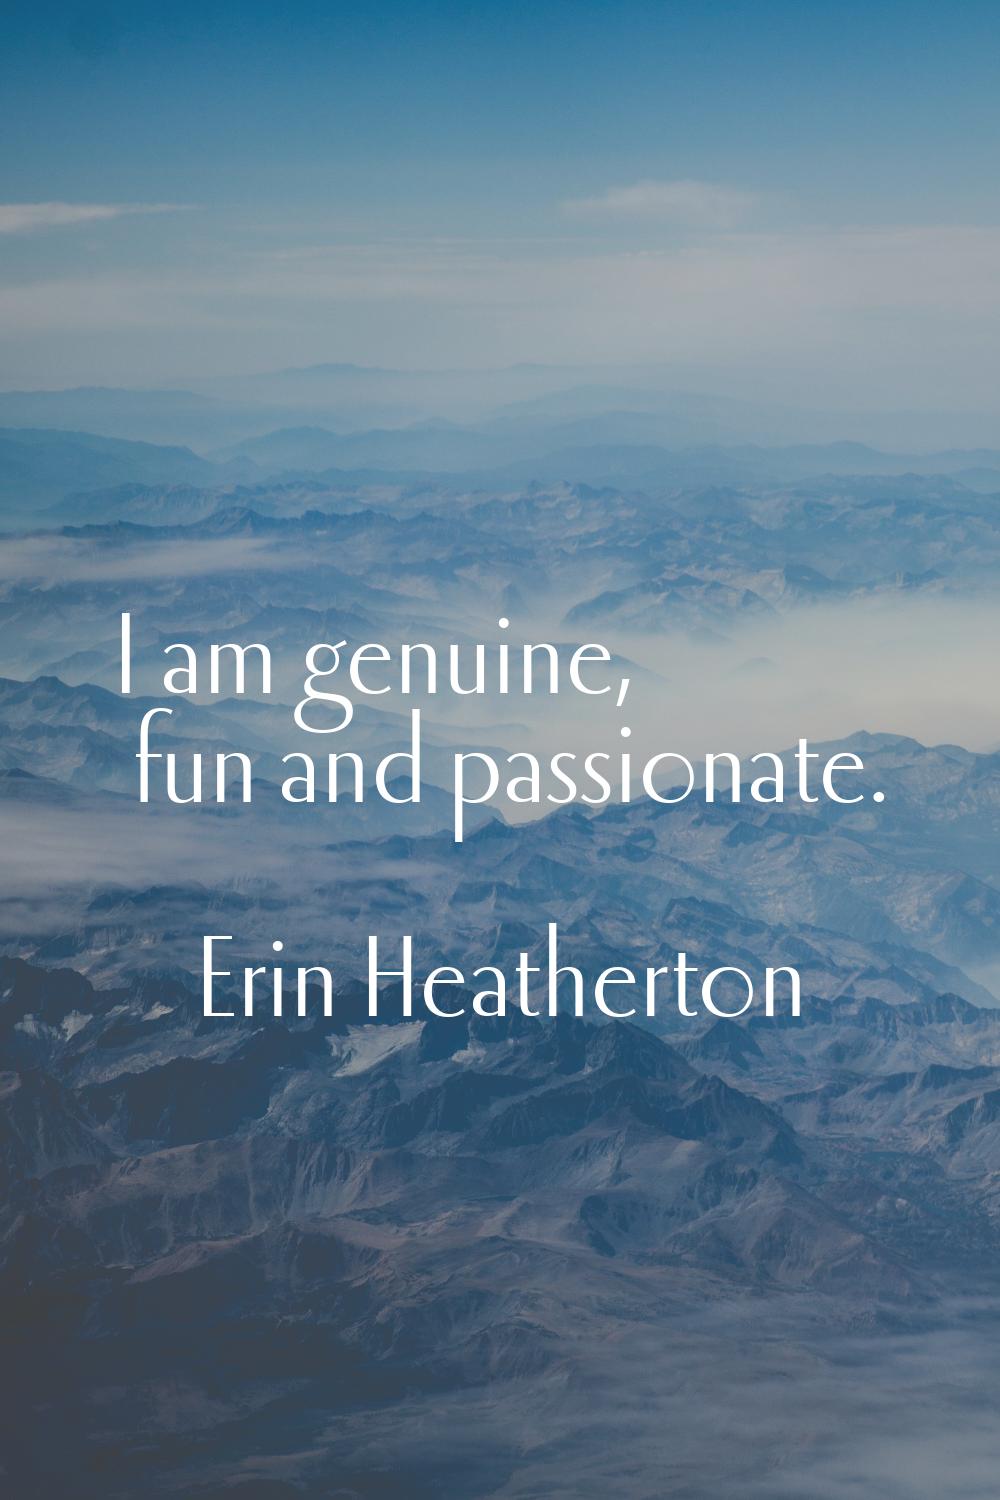 I am genuine, fun and passionate.